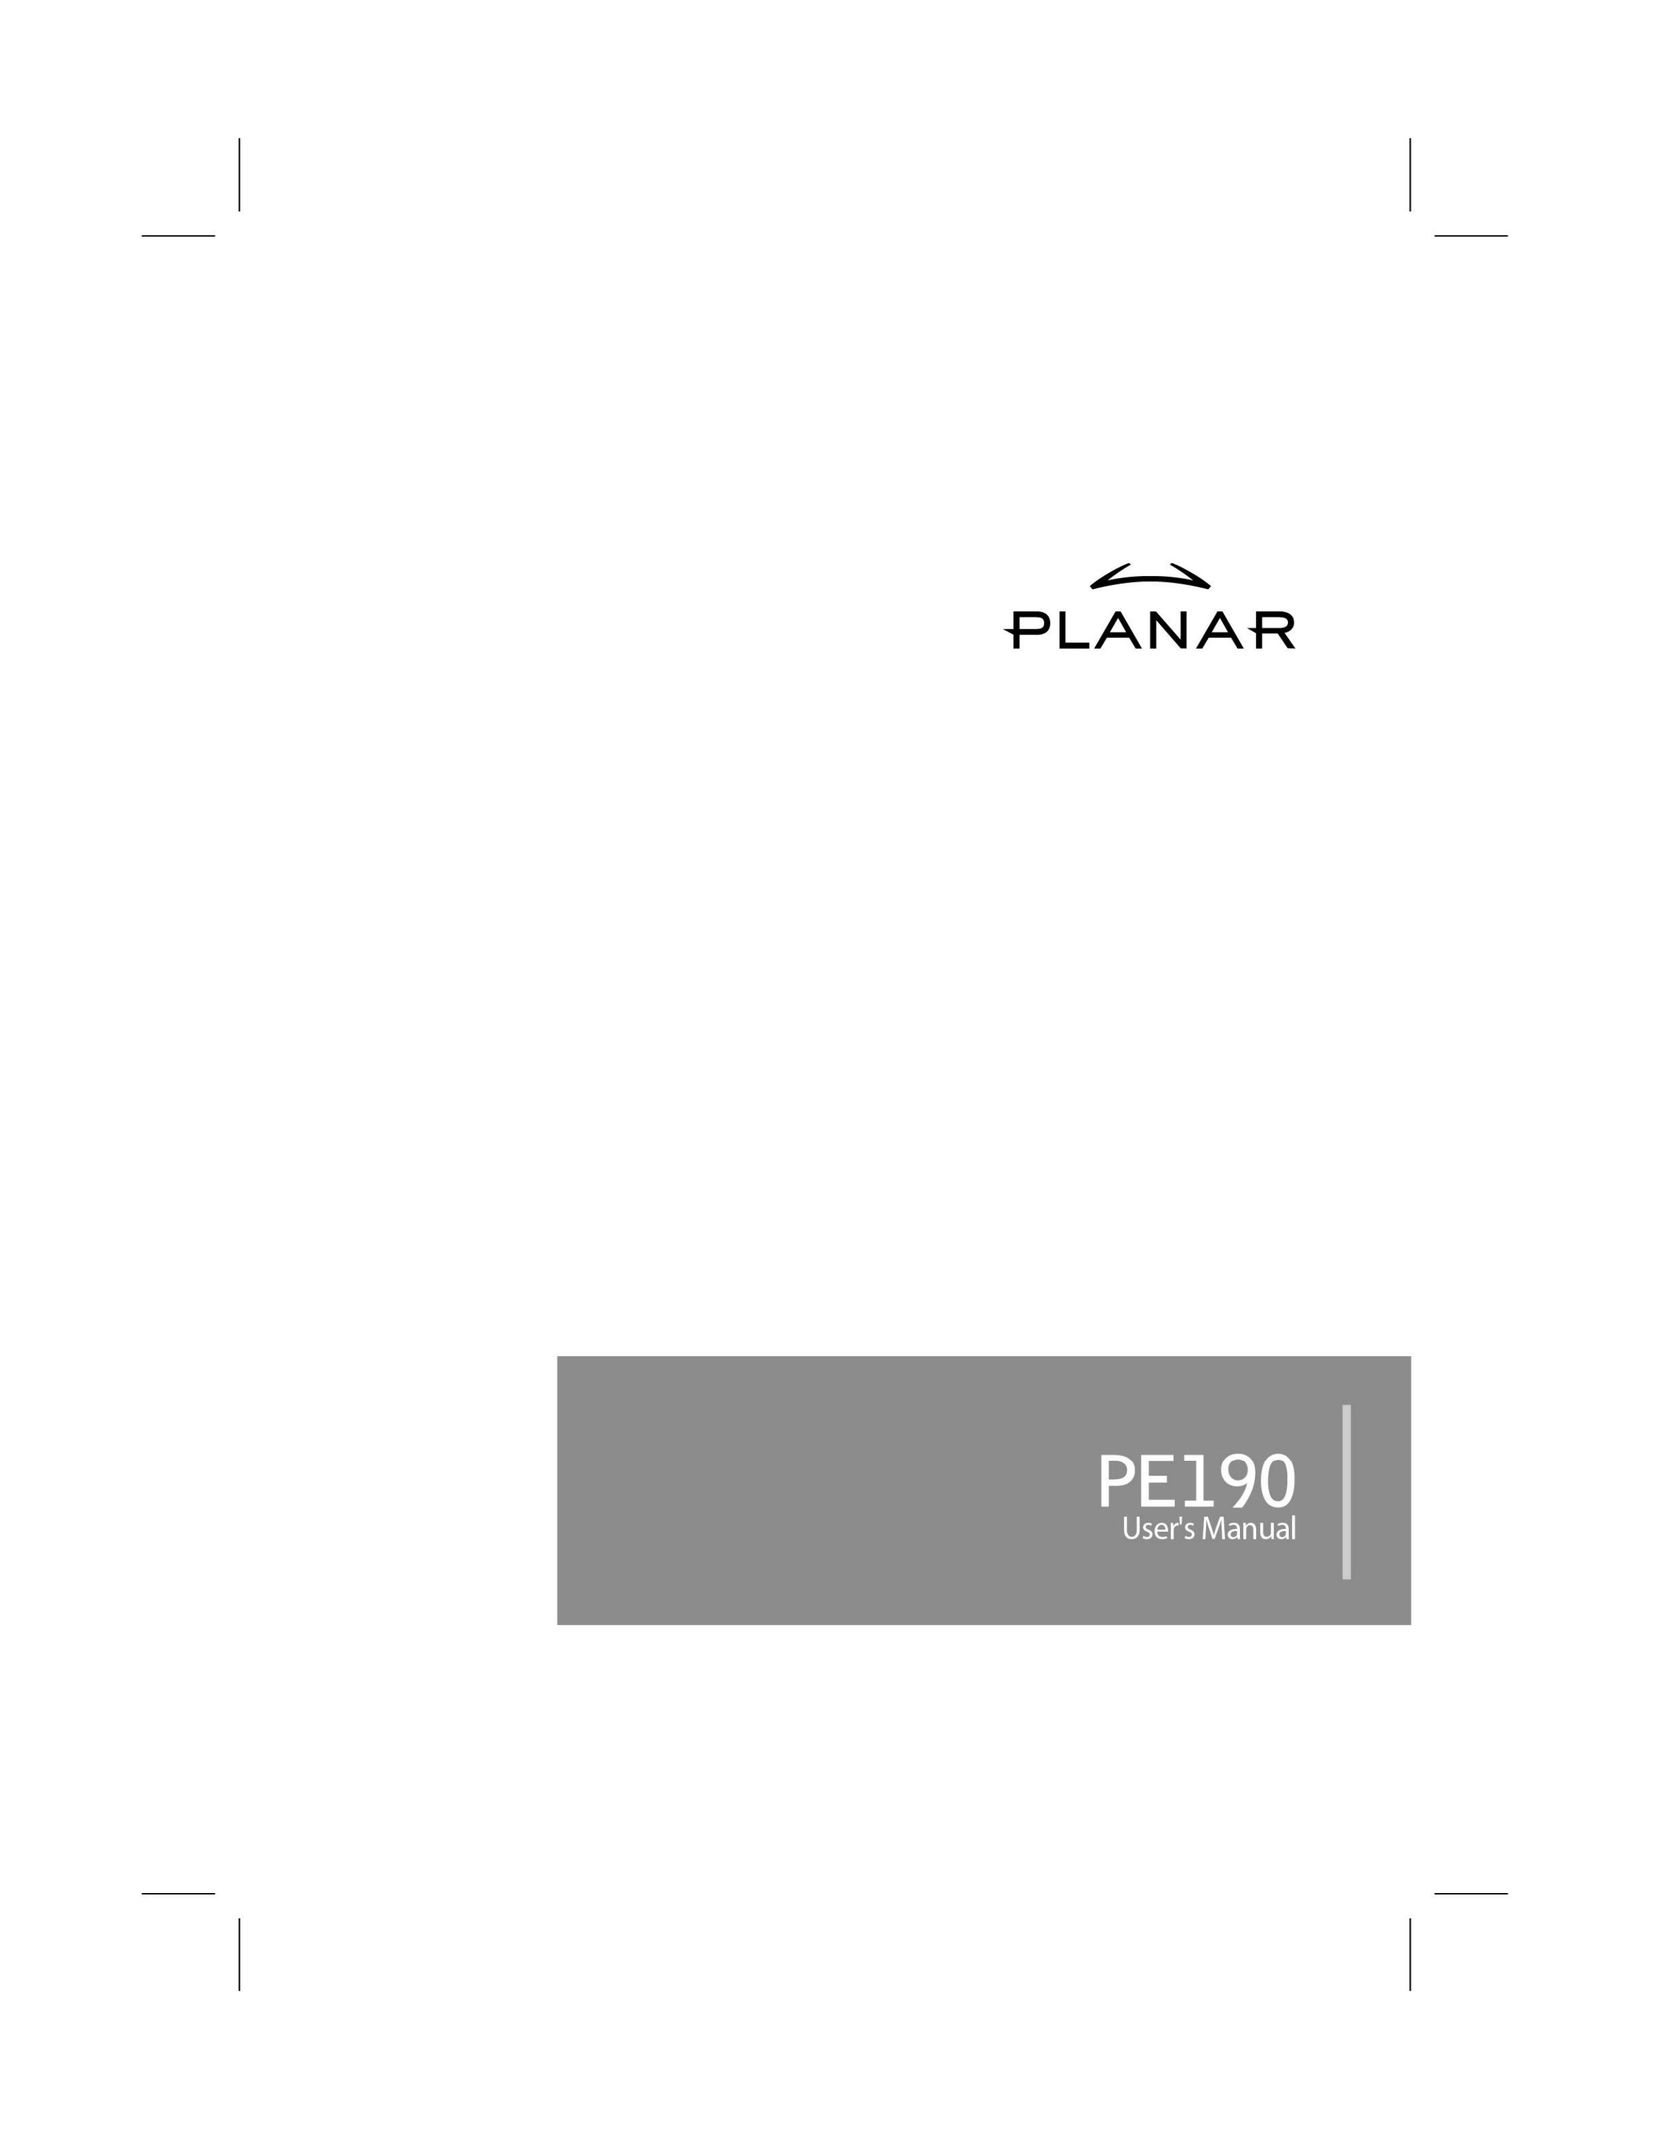 Planar PE190 Car Video System User Manual